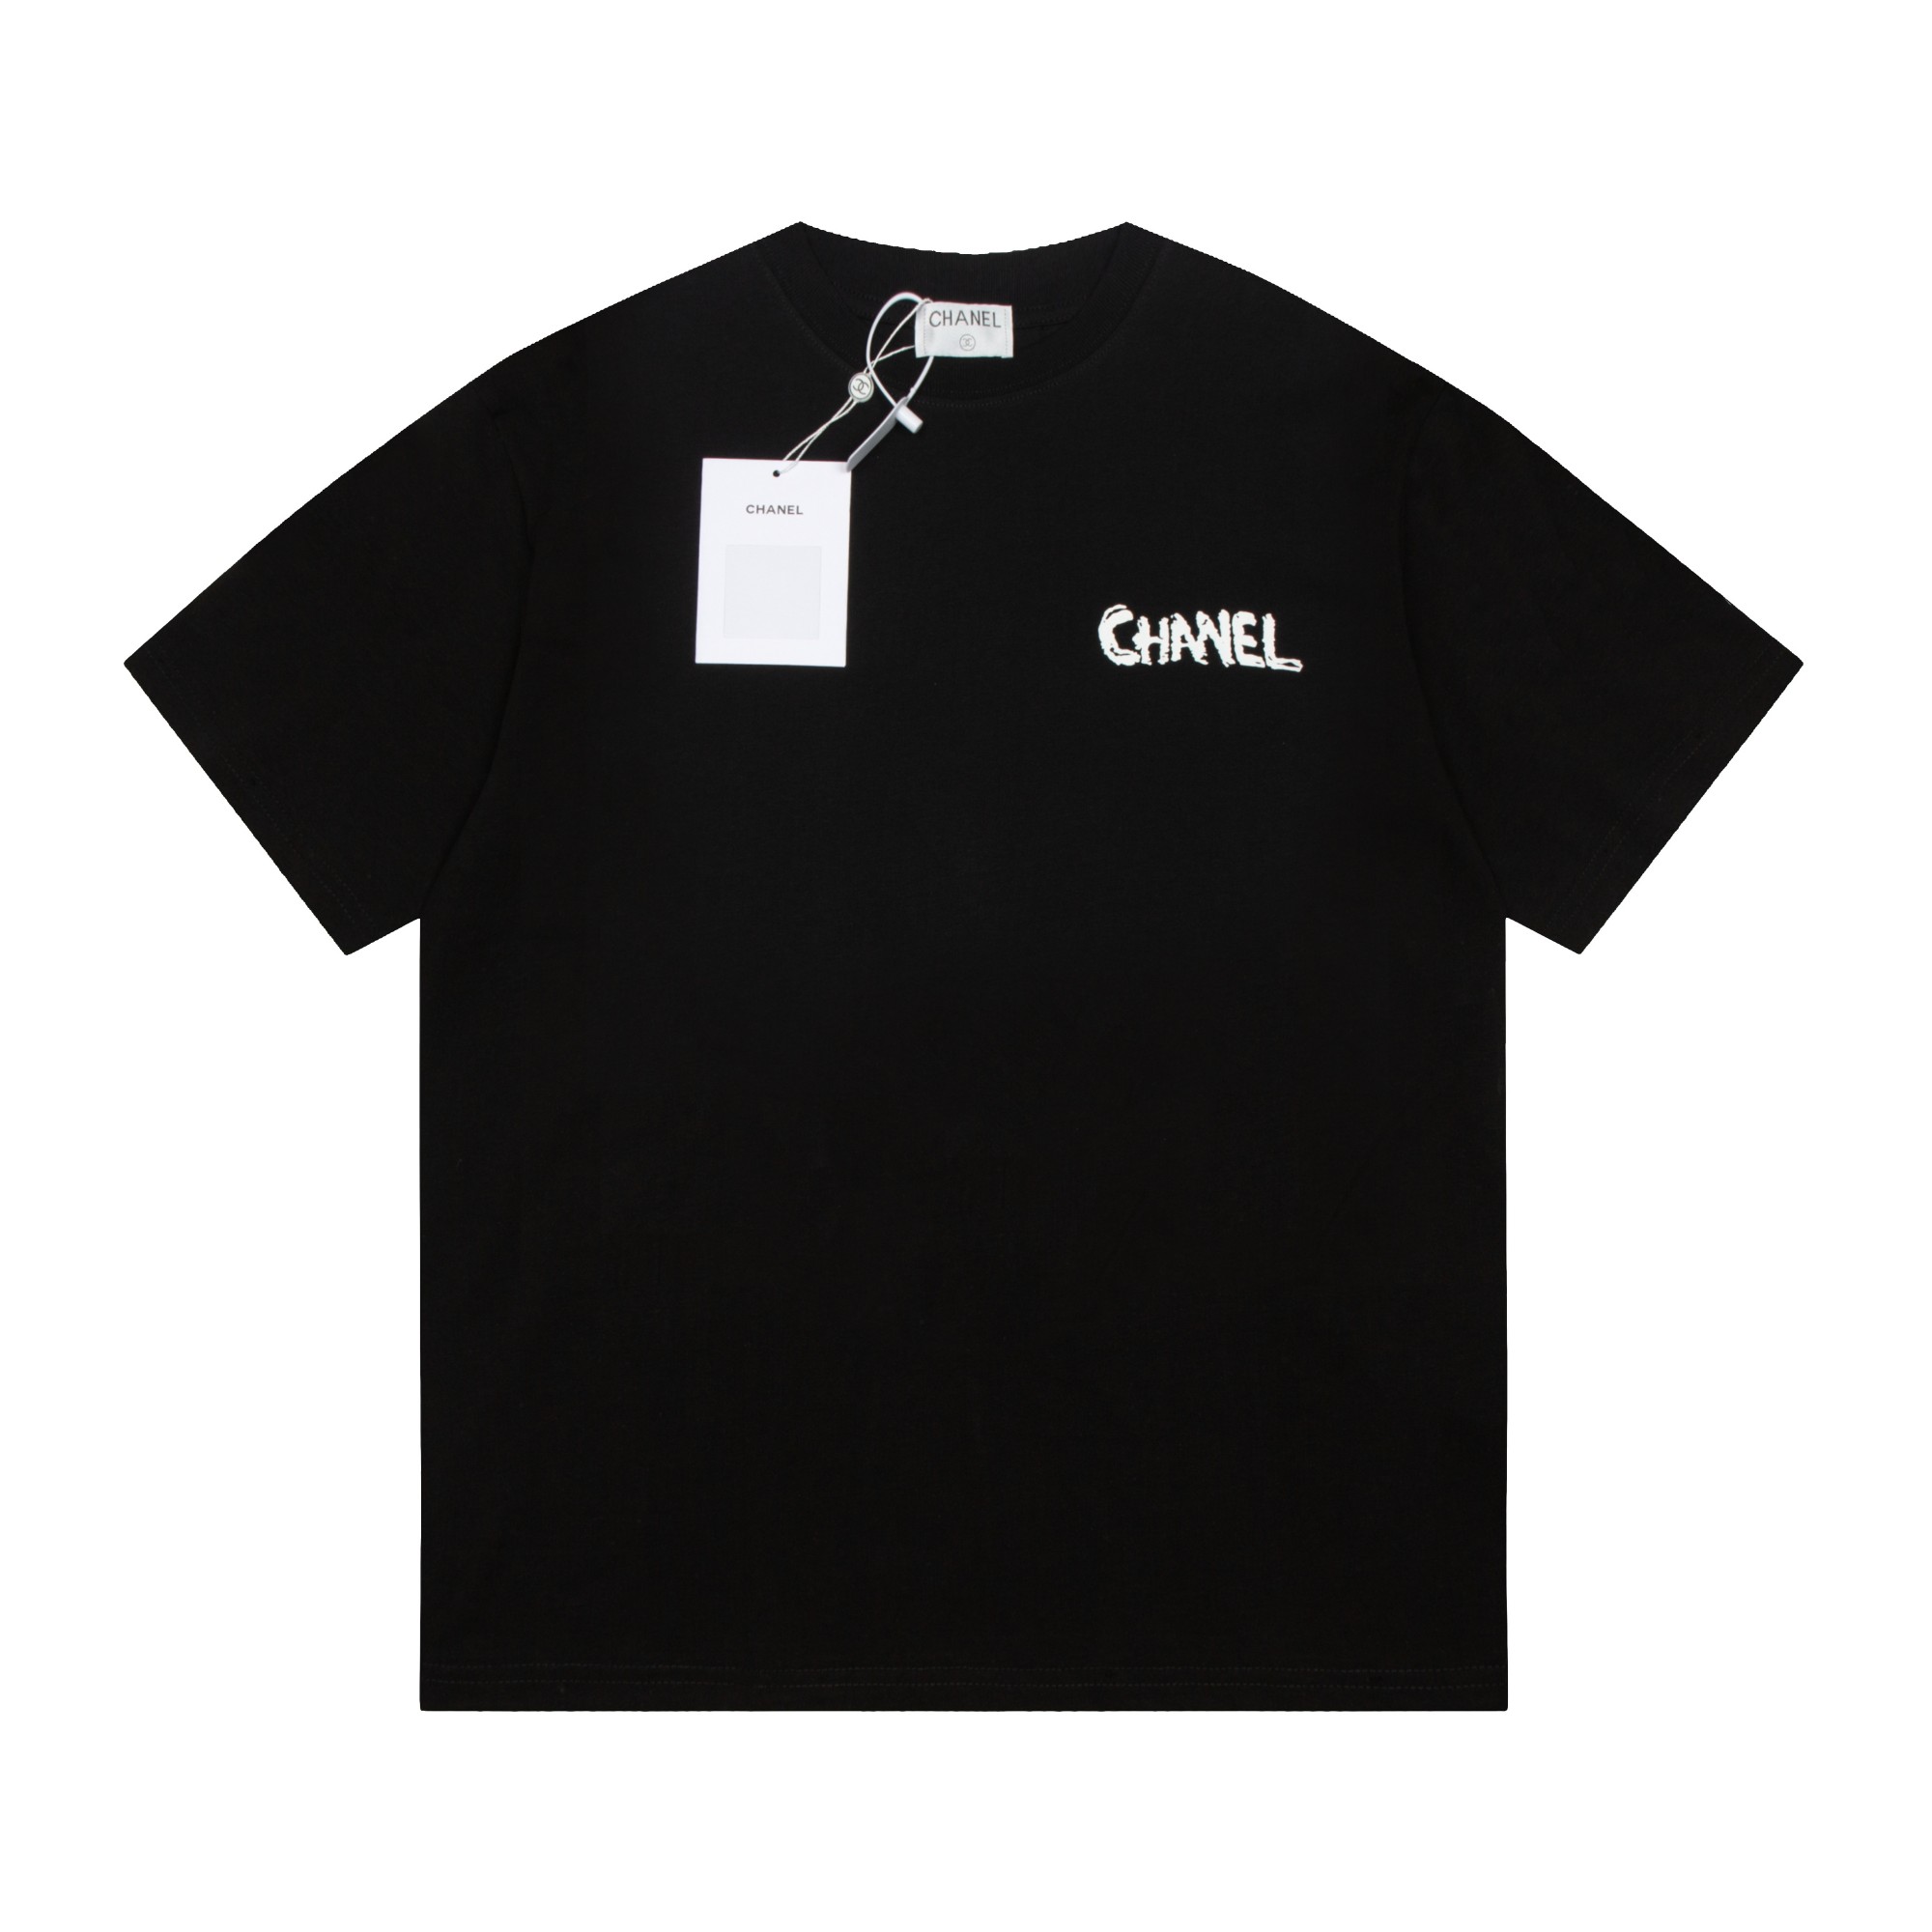 Chanel Clothing T-Shirt Printing Unisex Cotton Short Sleeve